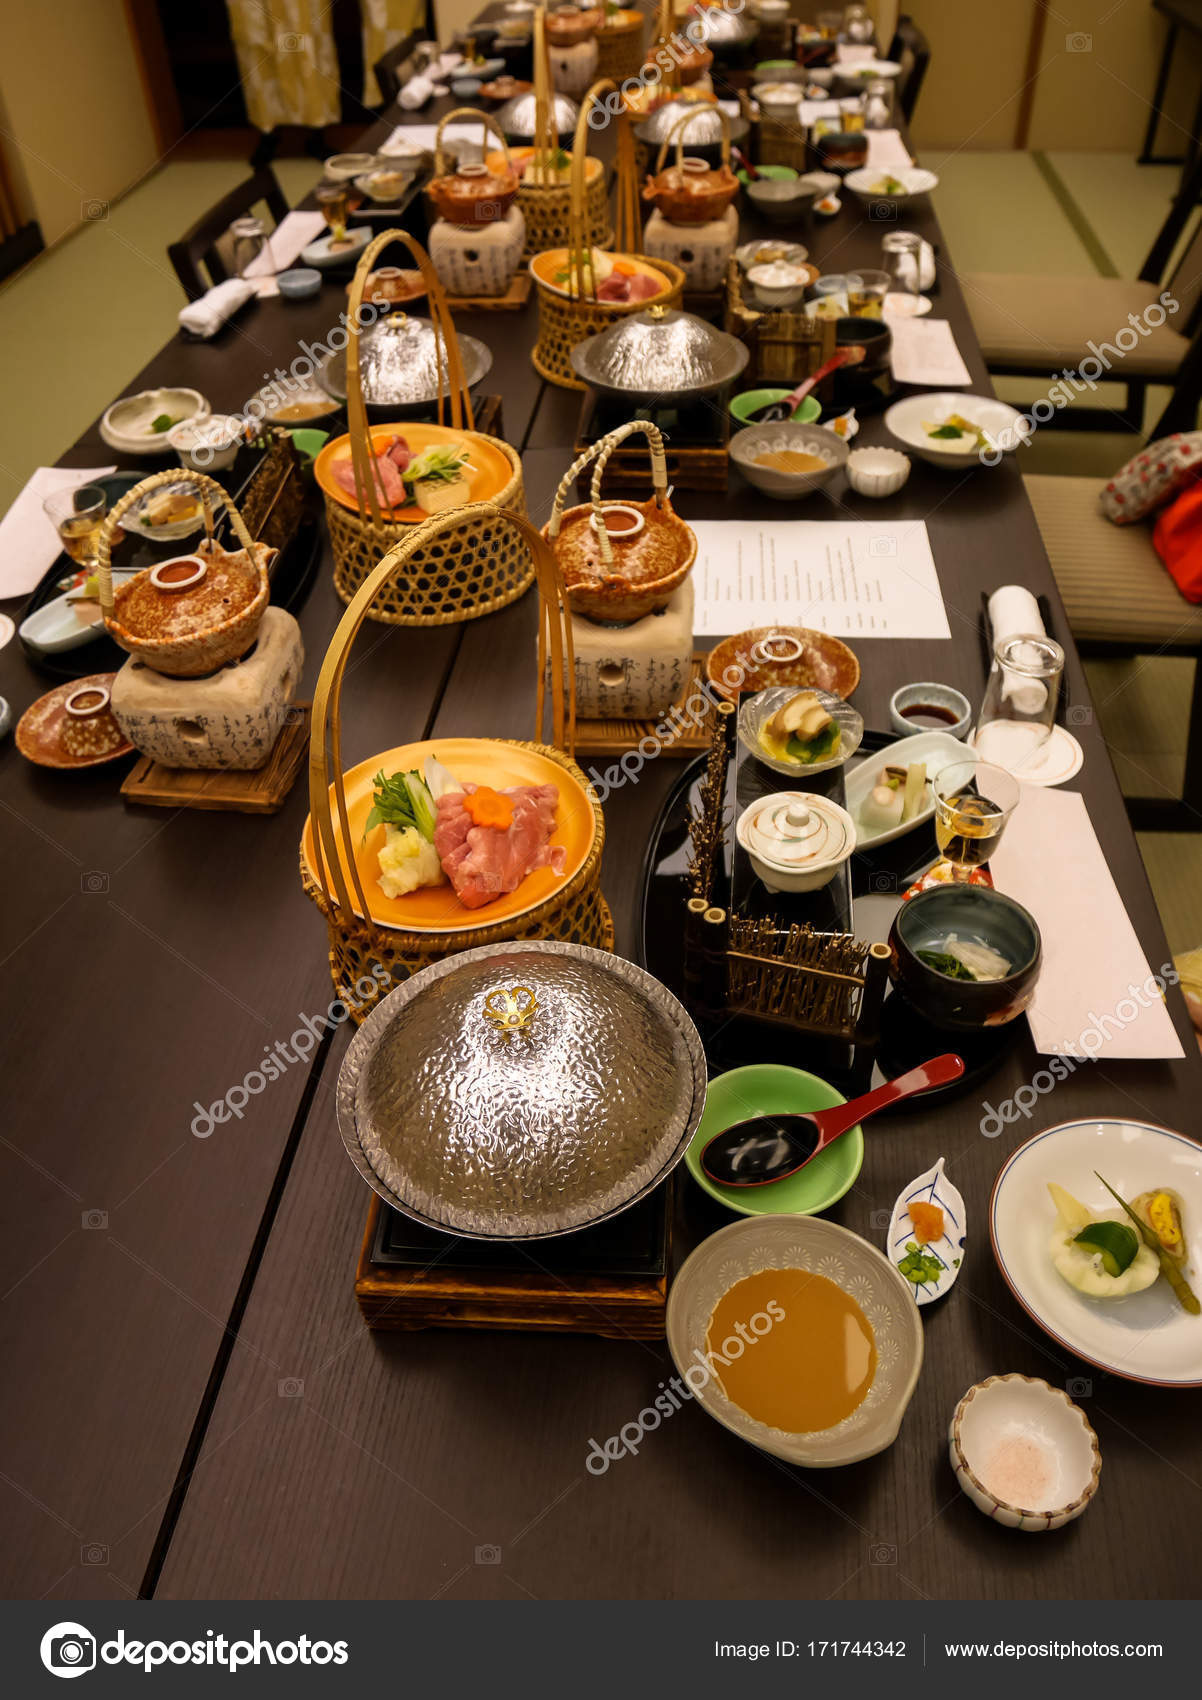 https://st3.depositphotos.com/12965274/17174/i/1600/depositphotos_171744342-stock-photo-japanese-ryokan-kaiseki-dinner-sets.jpg